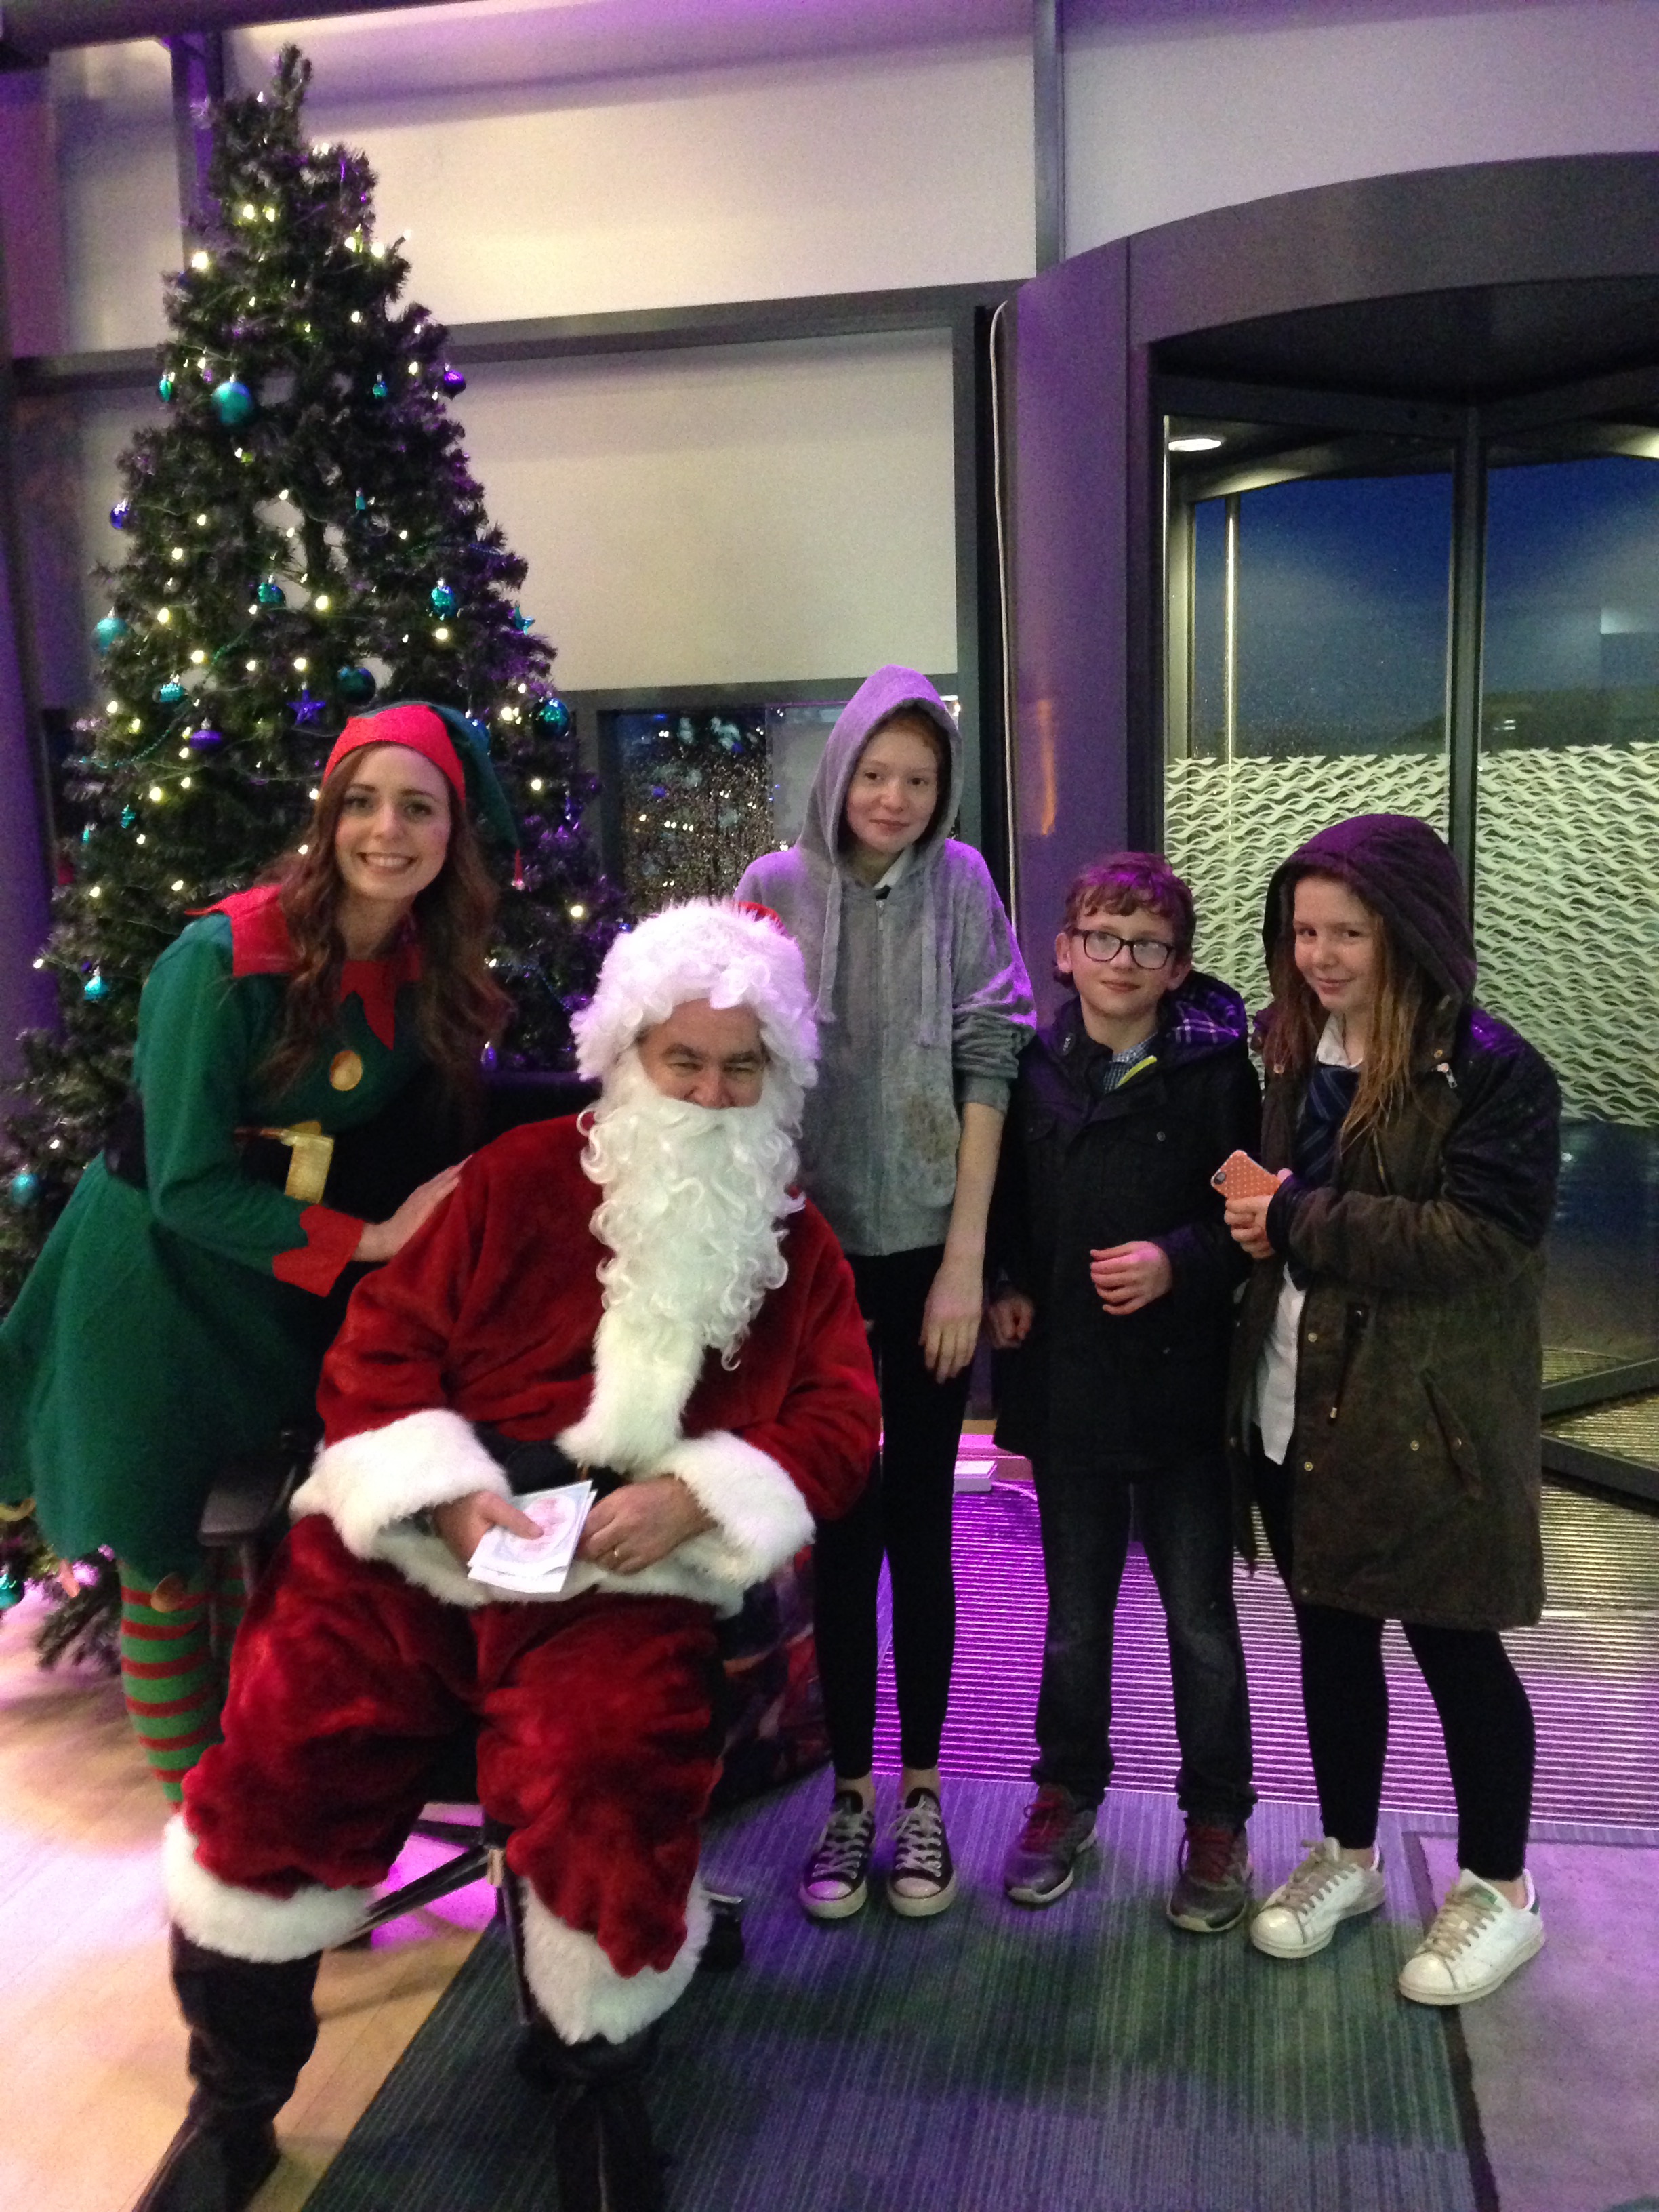 Santa his elf and the children